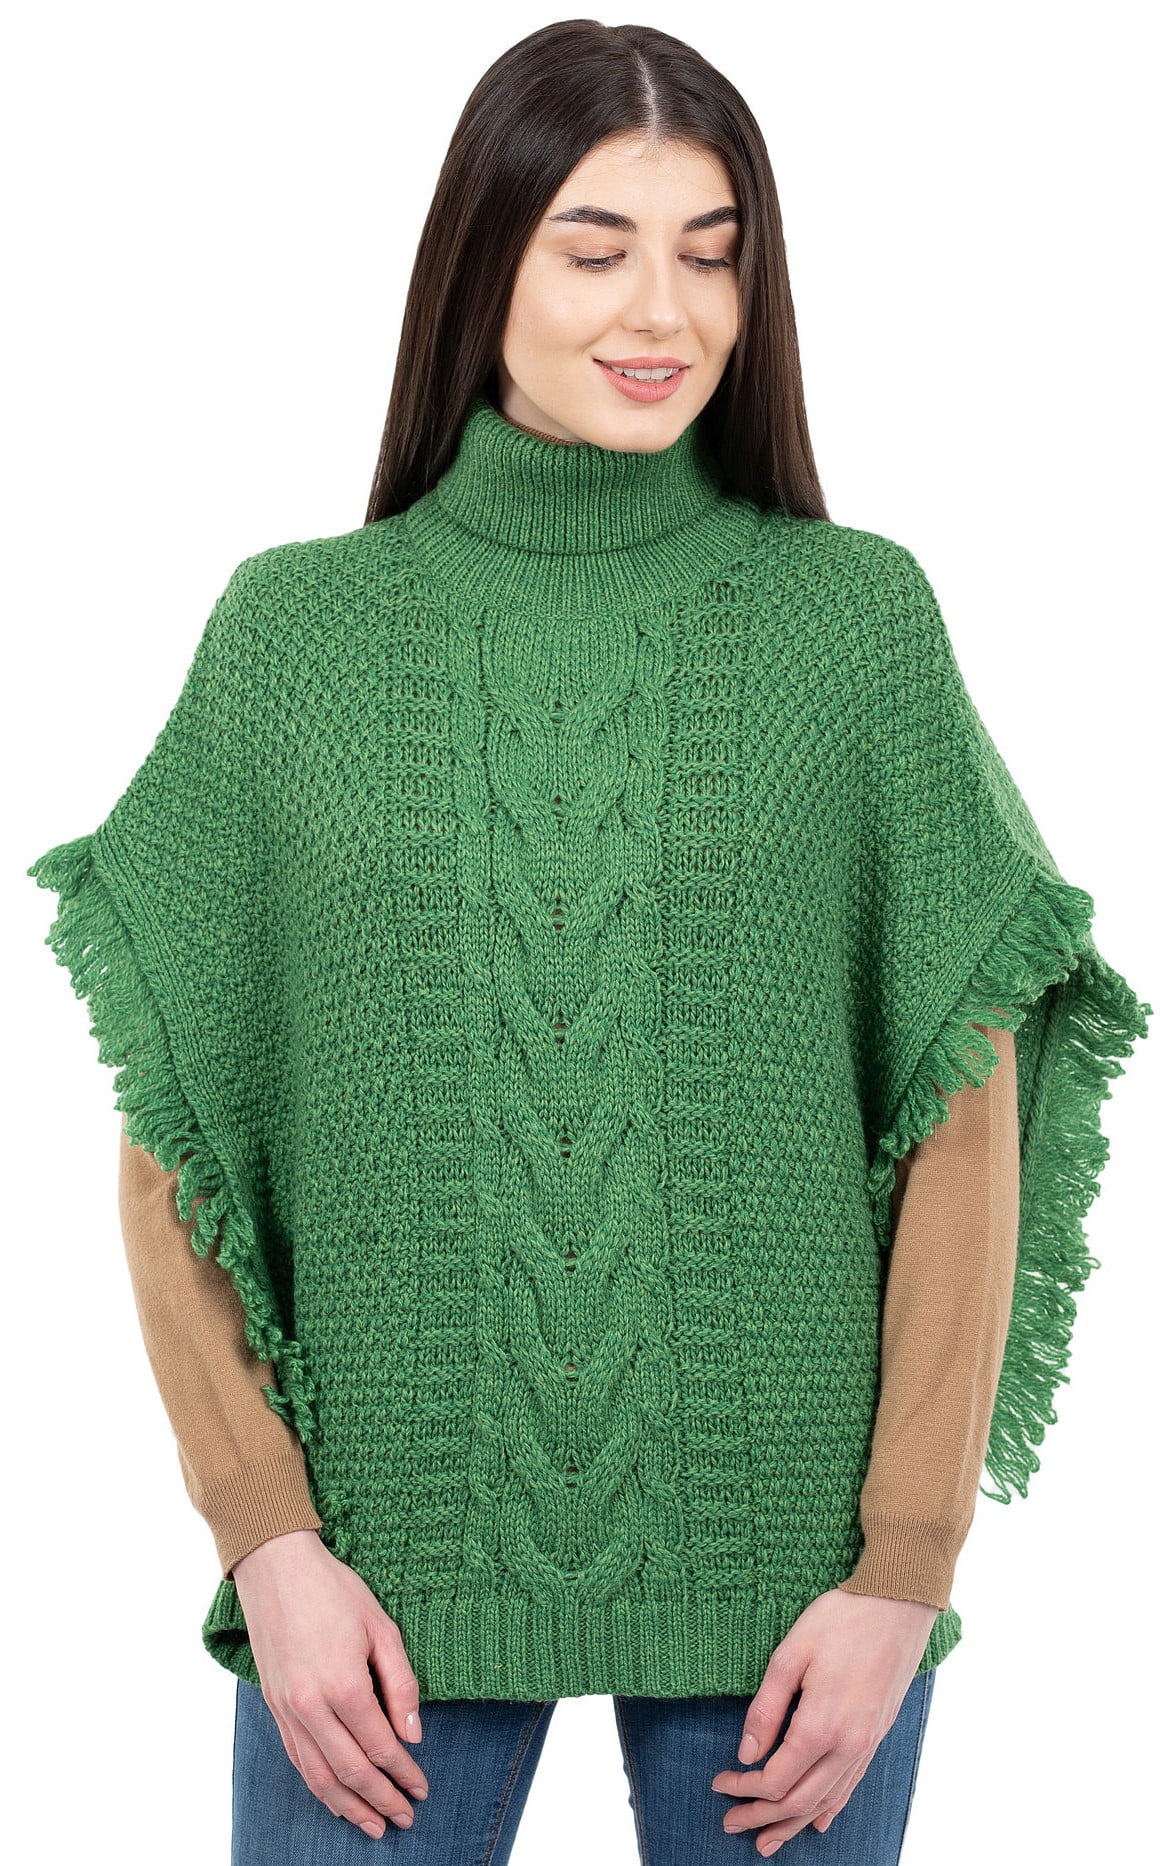 SAOL 100% Merino Wool Women's Aran Cable Knitted Irish Cape High Neck Sweater Made in Ireland - Walmart.com